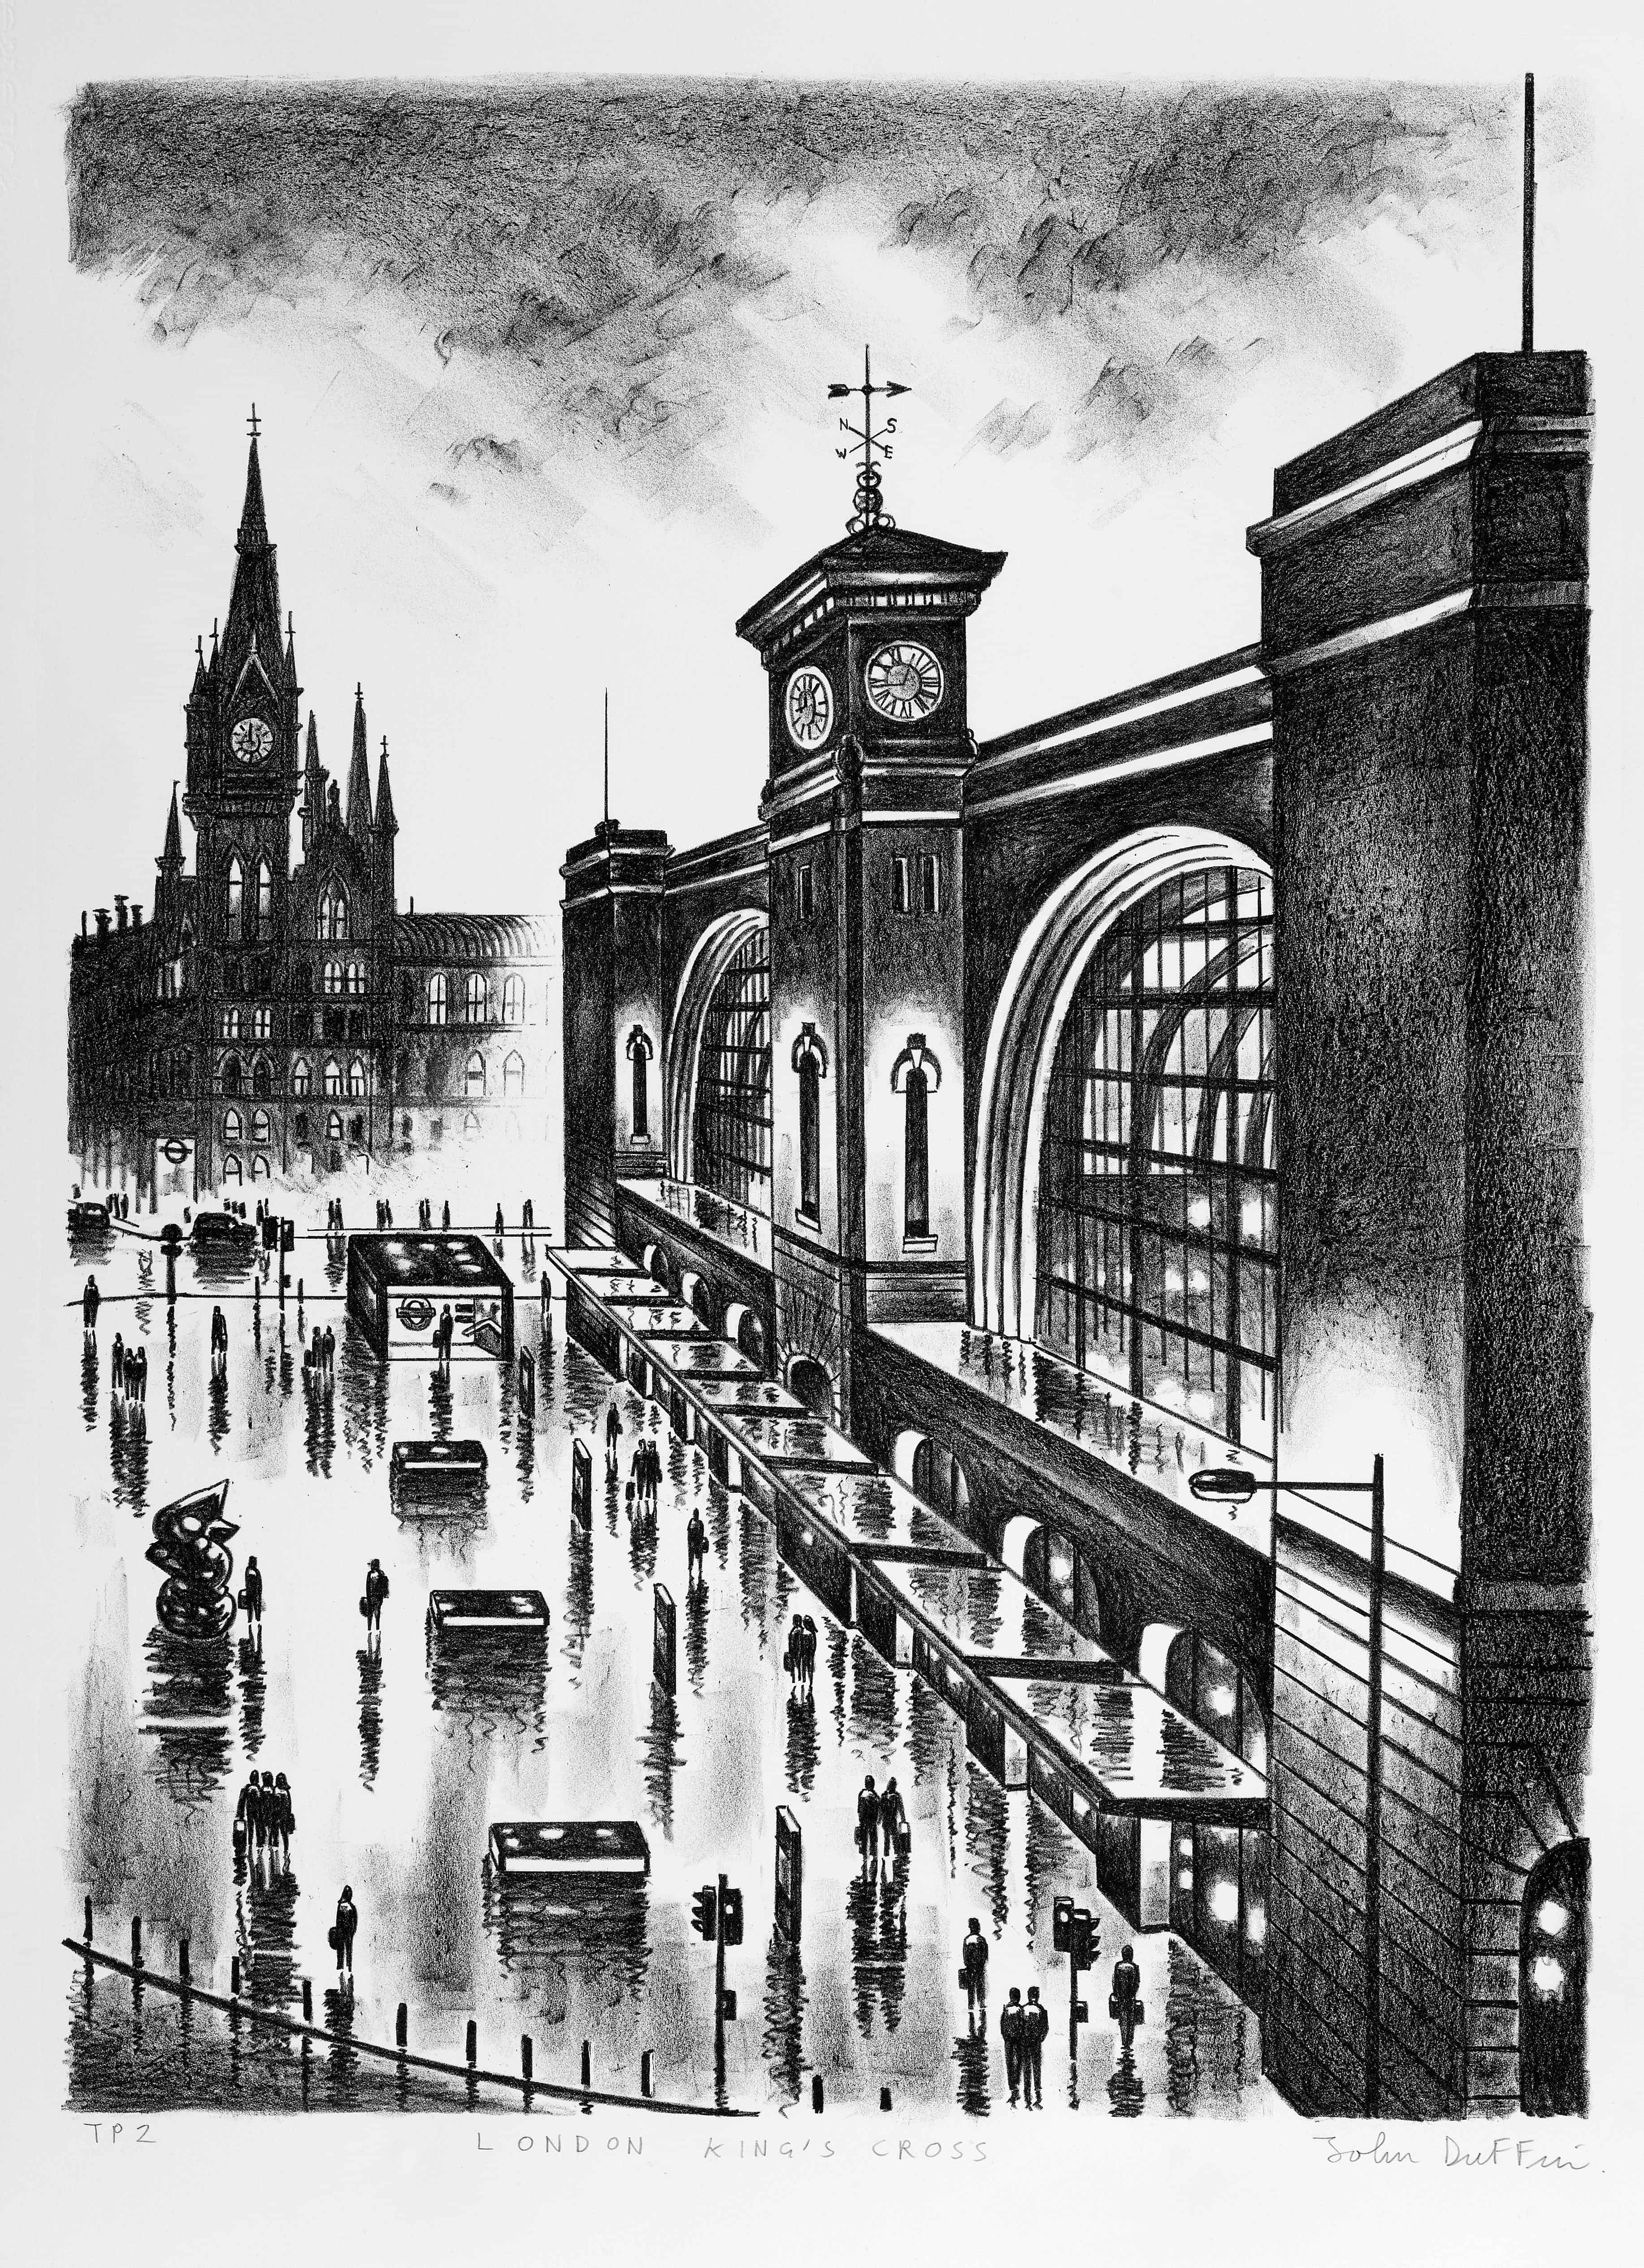 kanal Repræsentere sympati London King's Cross by John Duffin - Murus Art / Limited Edition Art